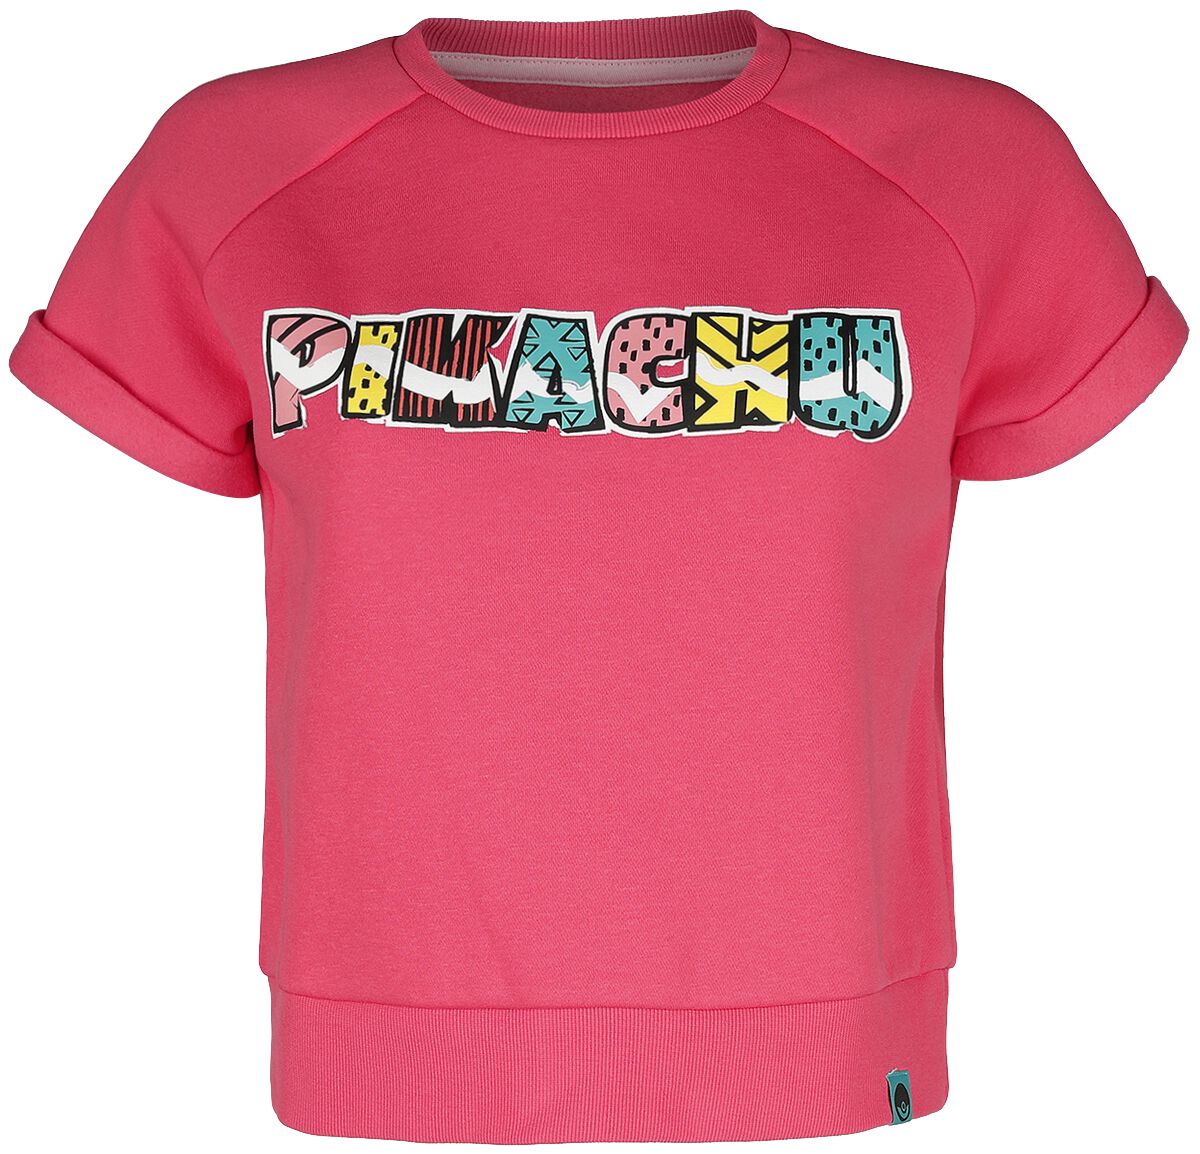 Pokémon Pikachu - Retro Summer T-Shirt pink